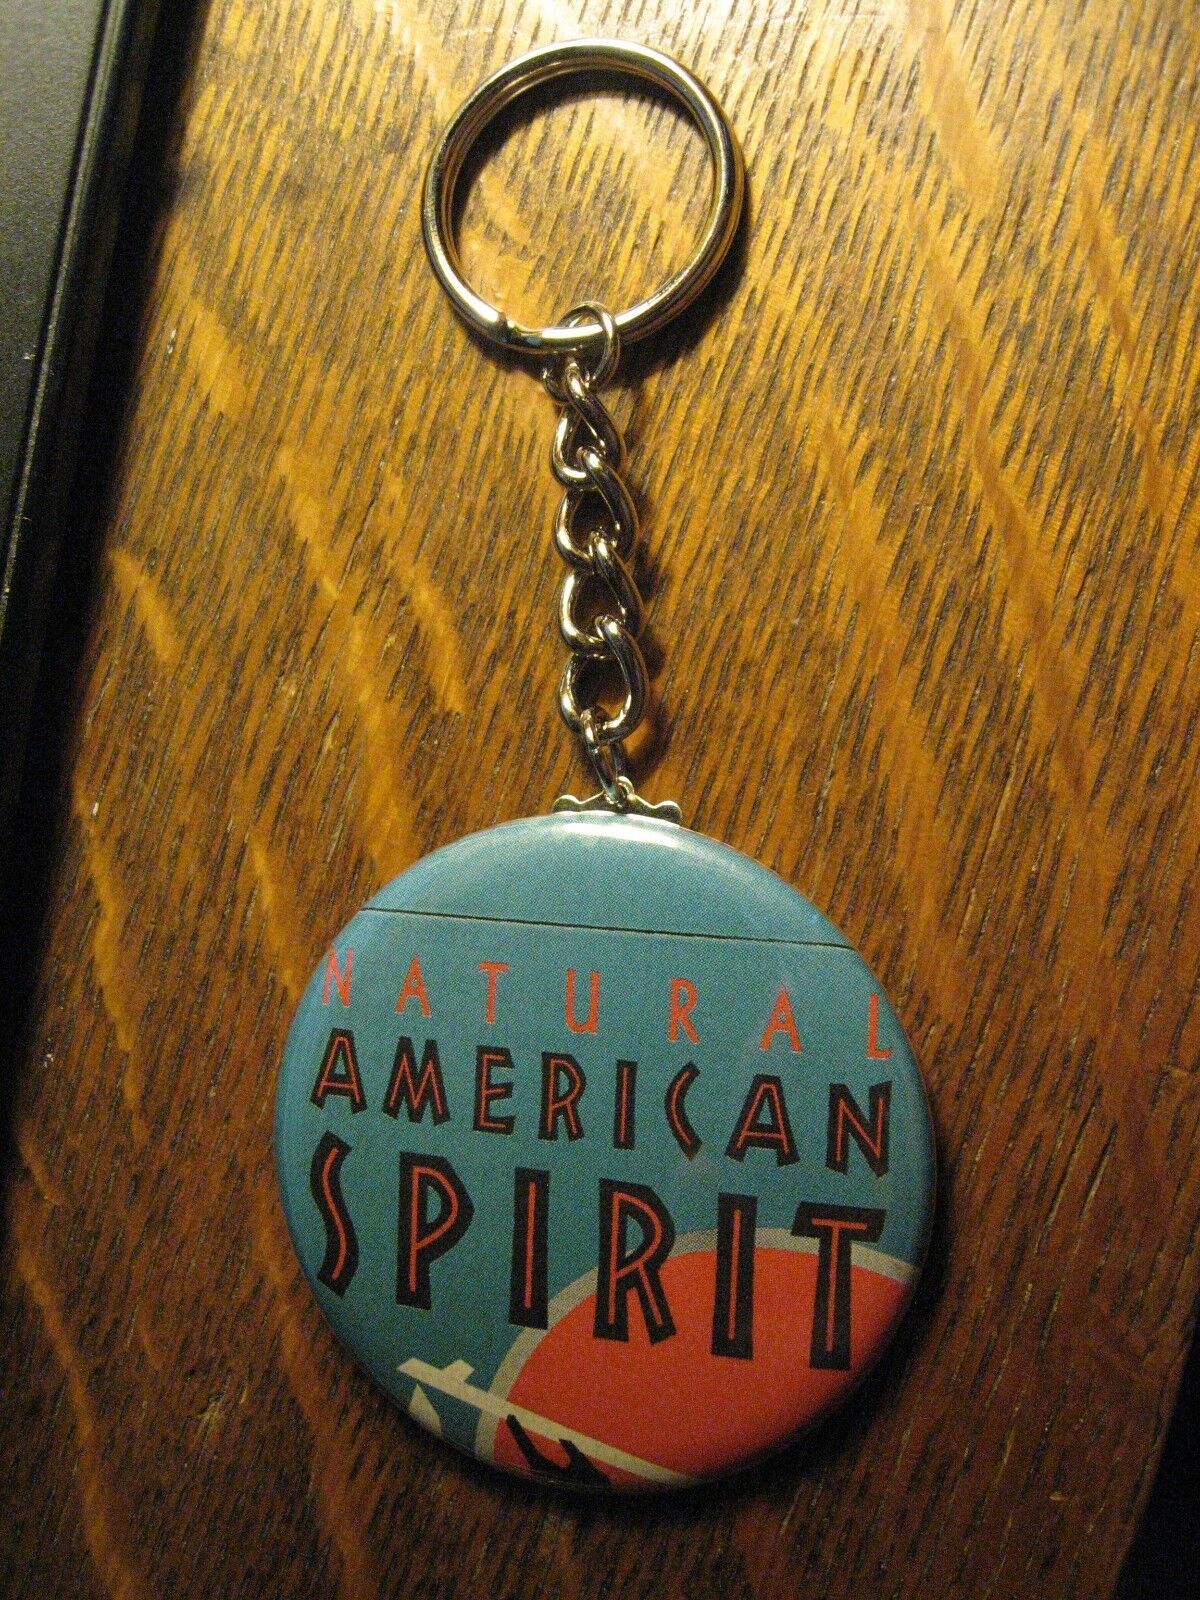 American Spirit Cigarettes Advertisement Keychain Backpack Purse Clip Ornament